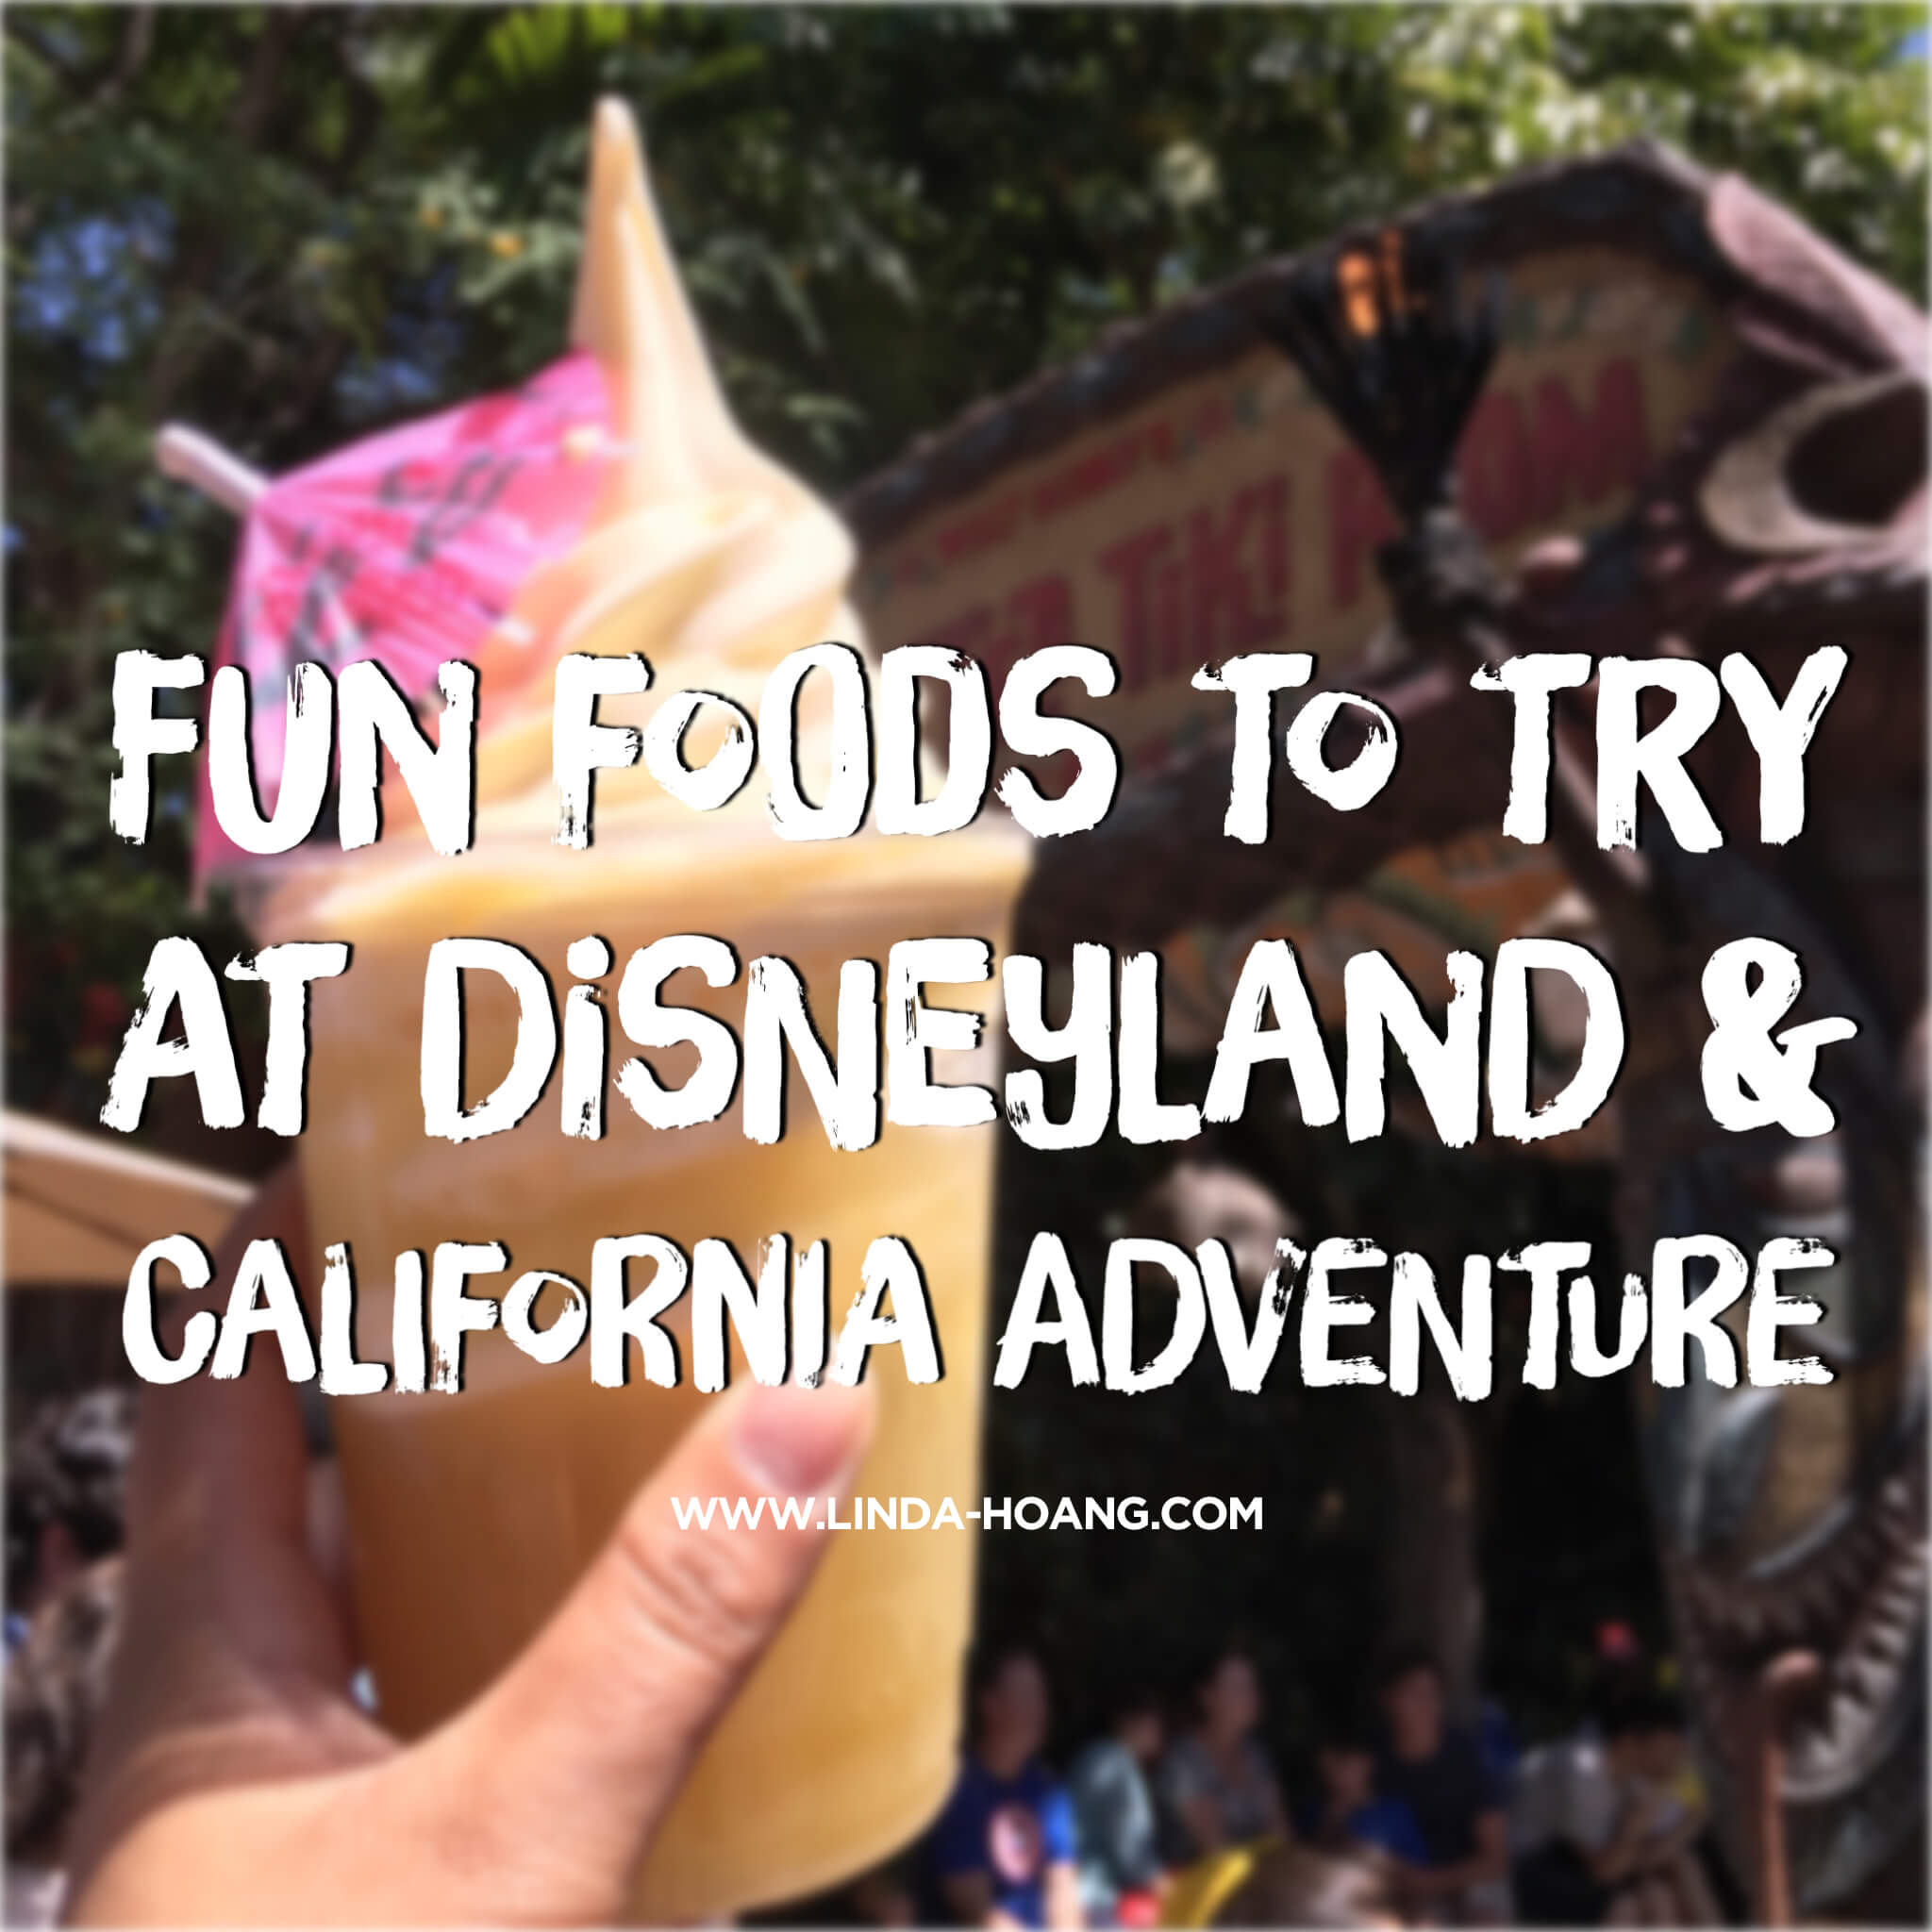 Fun Food Disneyland California Adventure